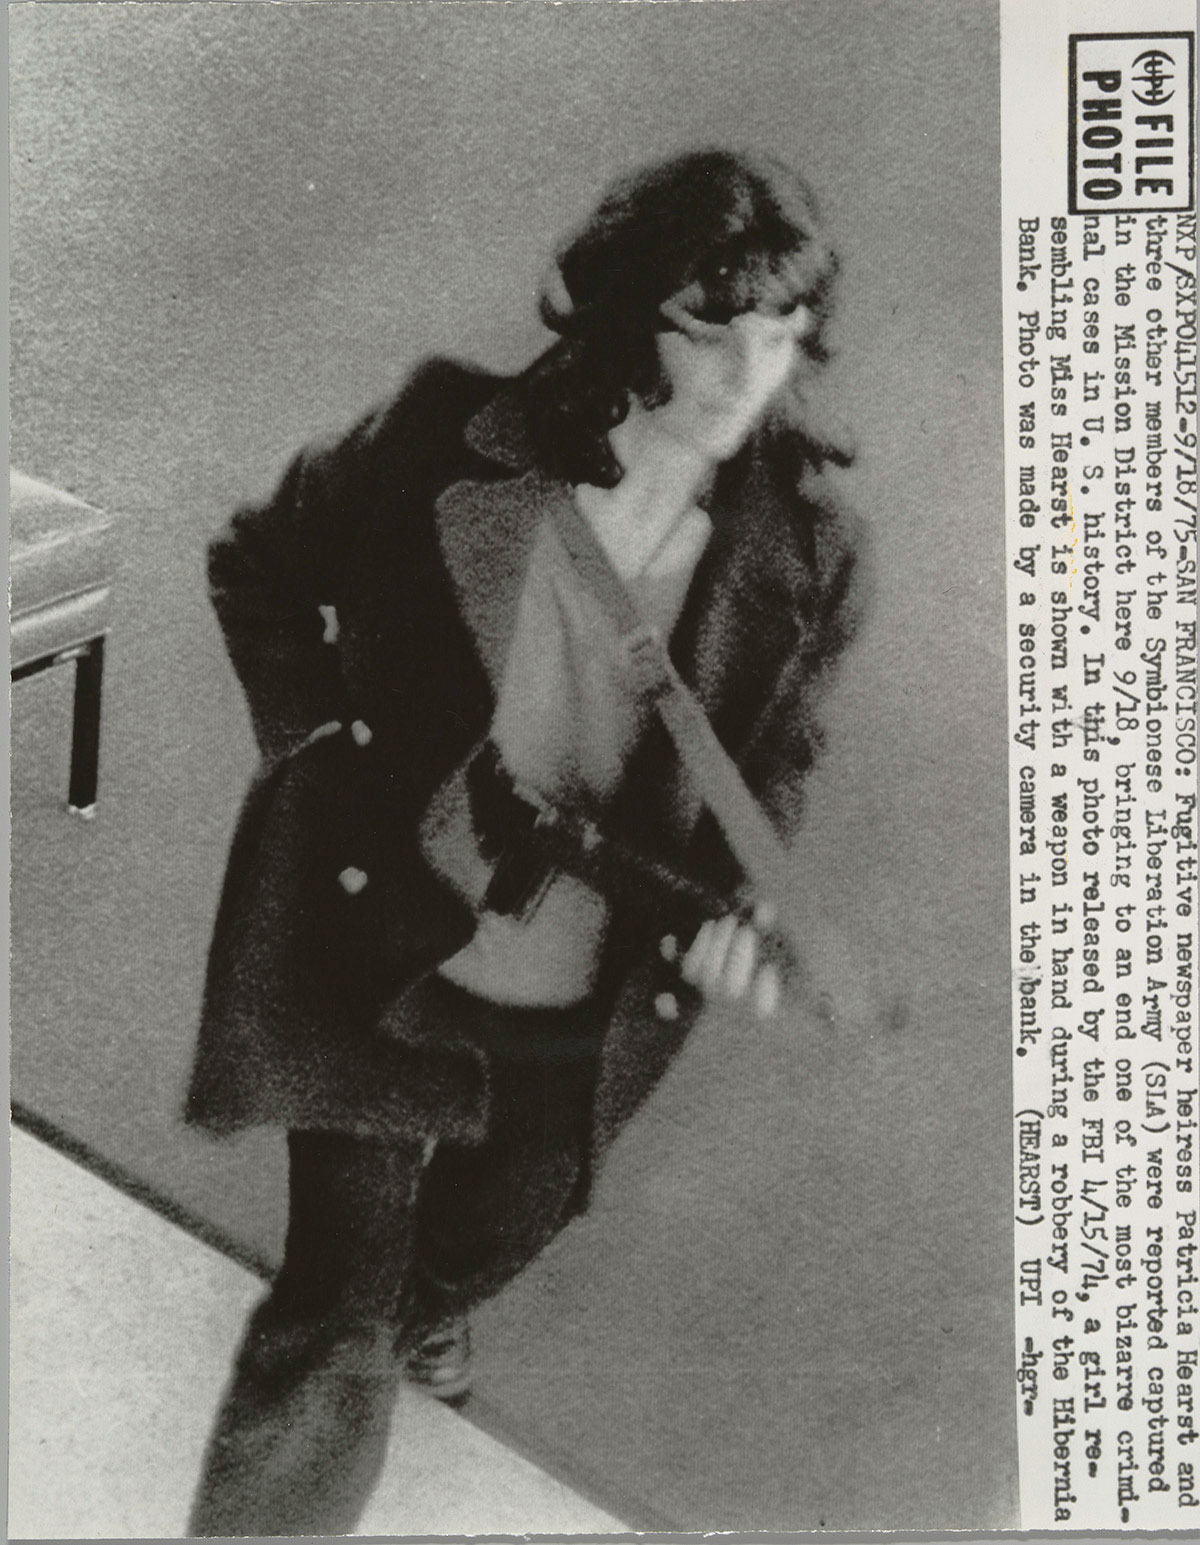 Patricia (Patty) Hearst during the Hibernia Bank robbery, San Francisco, 1974